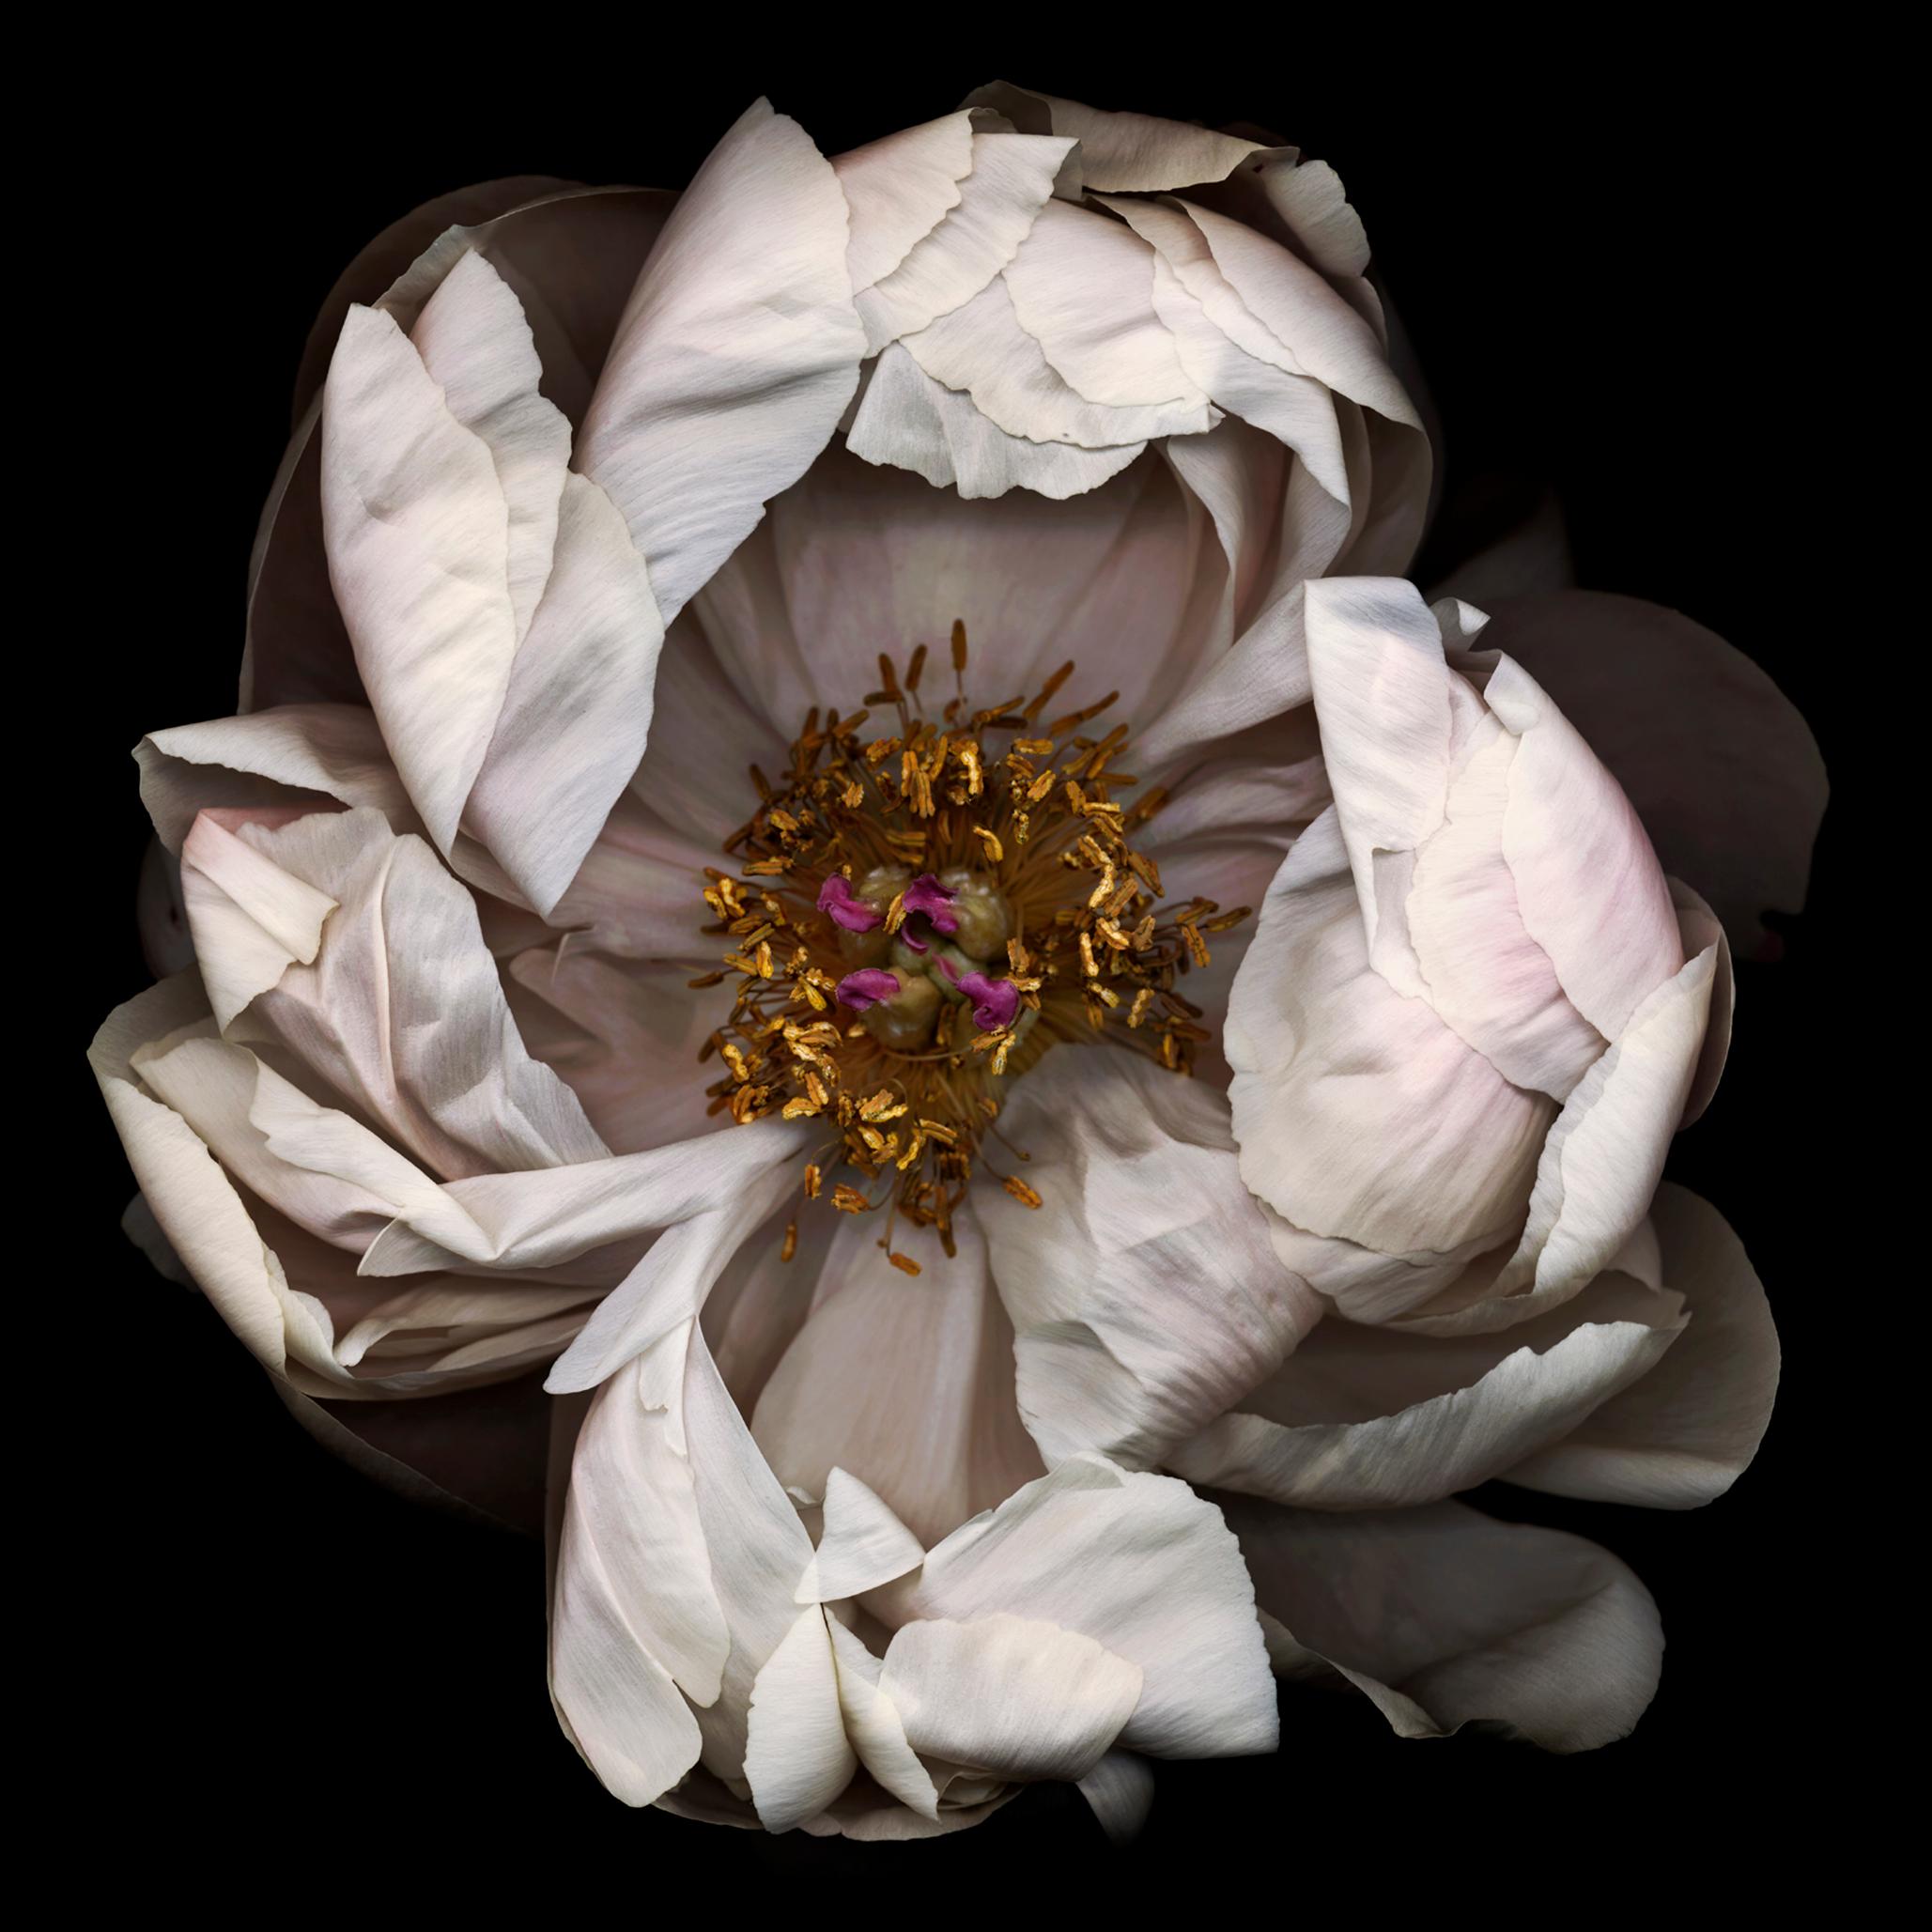 Chad Kleitsch Still-Life Photograph - No. 13 (Framed Still Life Photograph of a White Peony Flower on Black) 